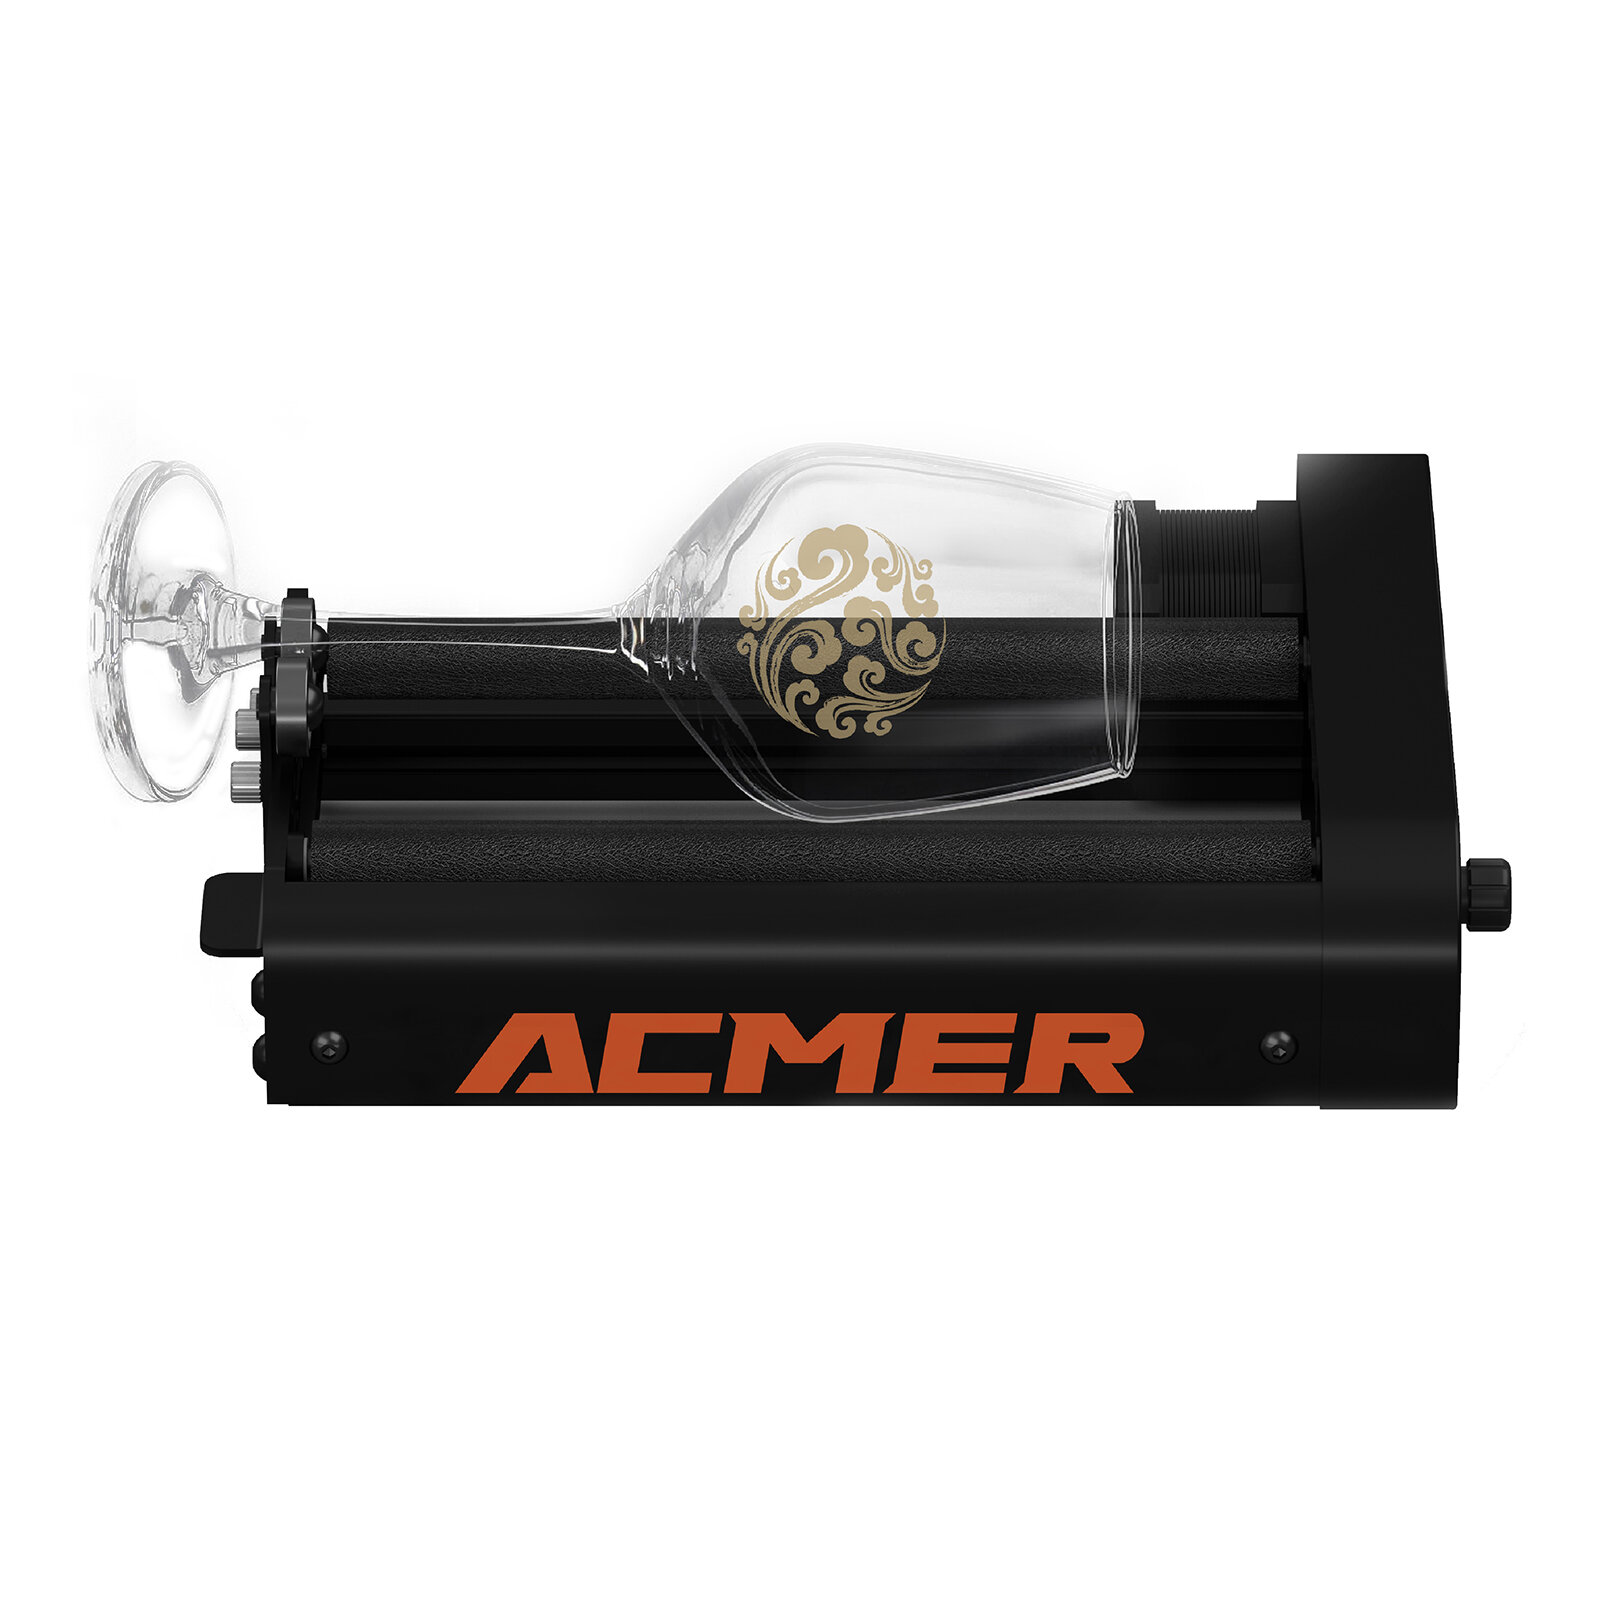 ACMER M1 Laser Engraver Roller z EU za $69.00 / ~275zł